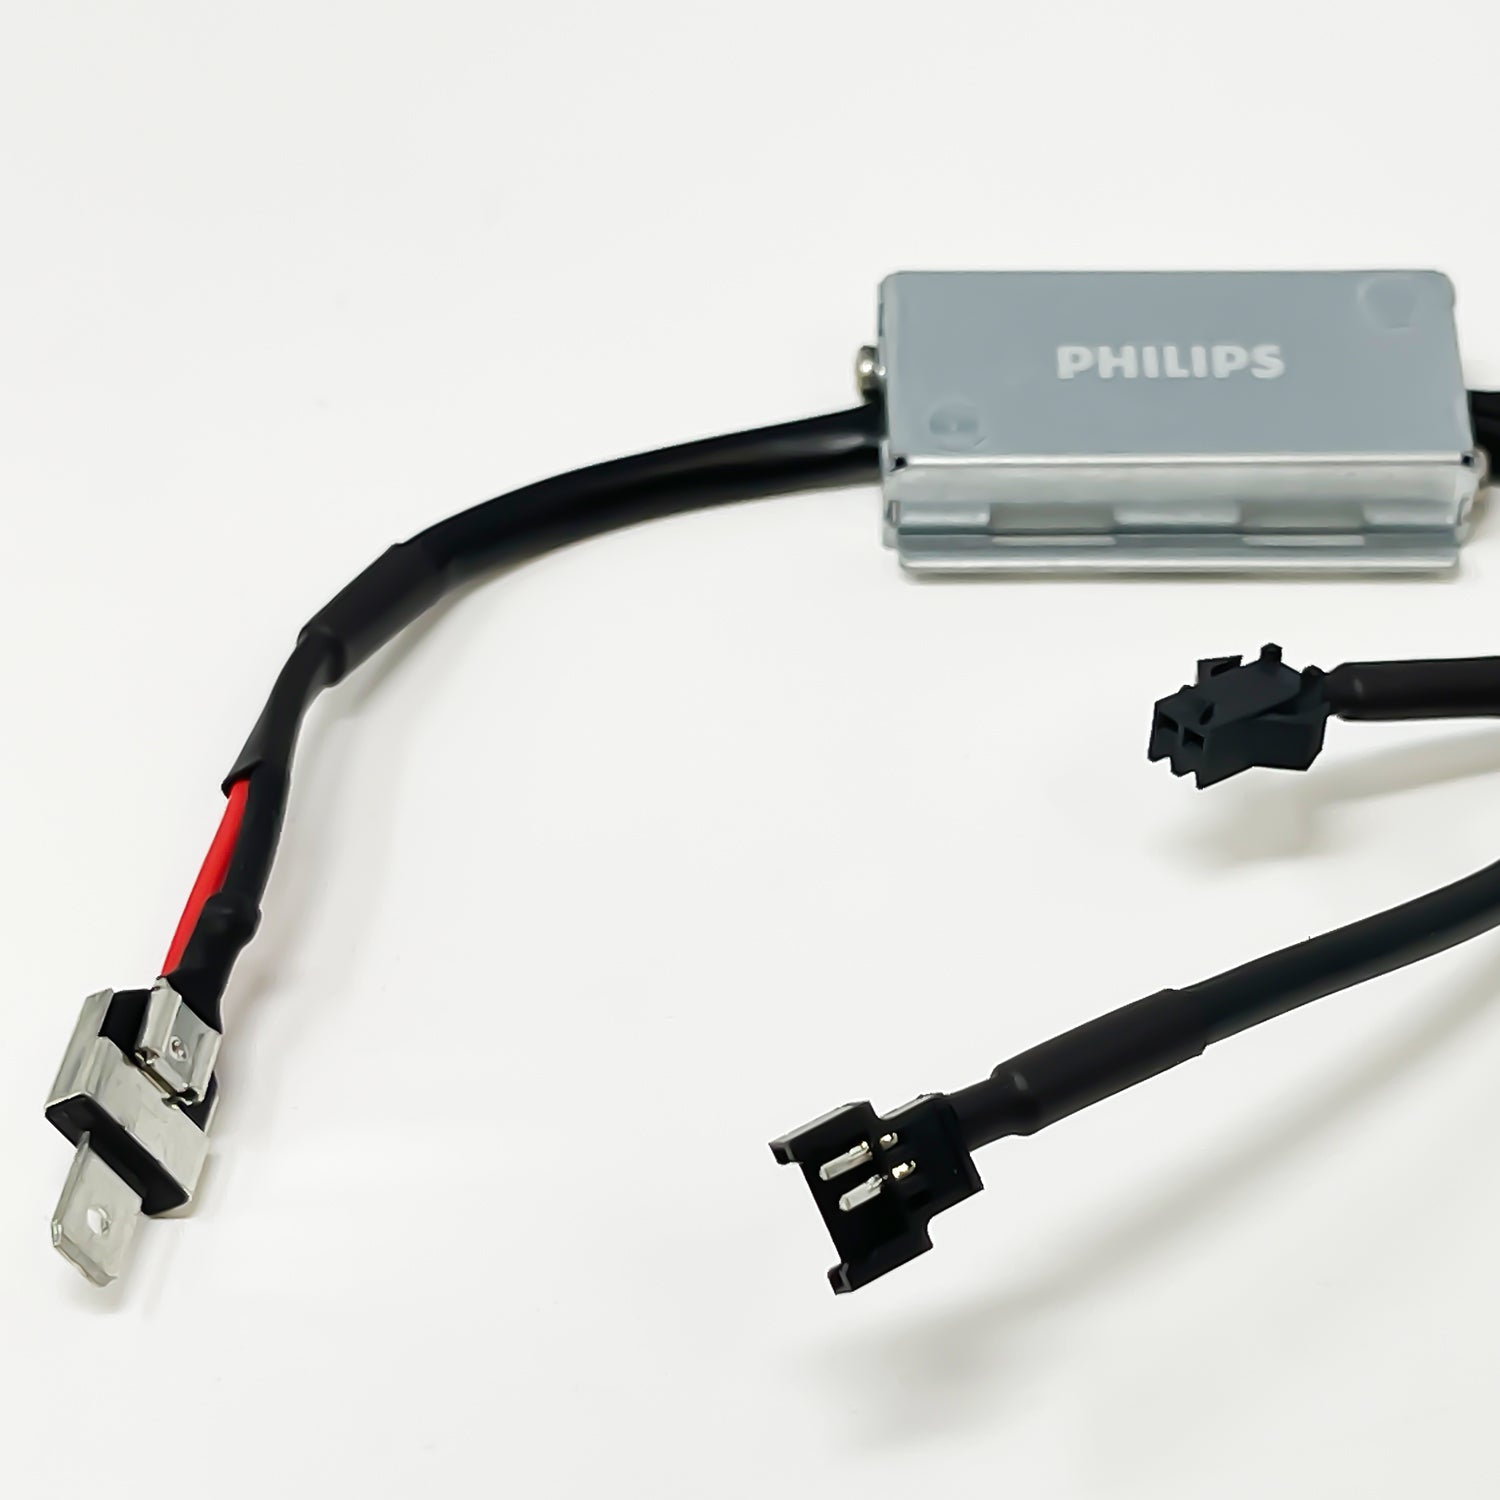 Philips H1 Ultinon Pro3021 LED Headlight 11258U3021X2 6000K 18W 12V 24V